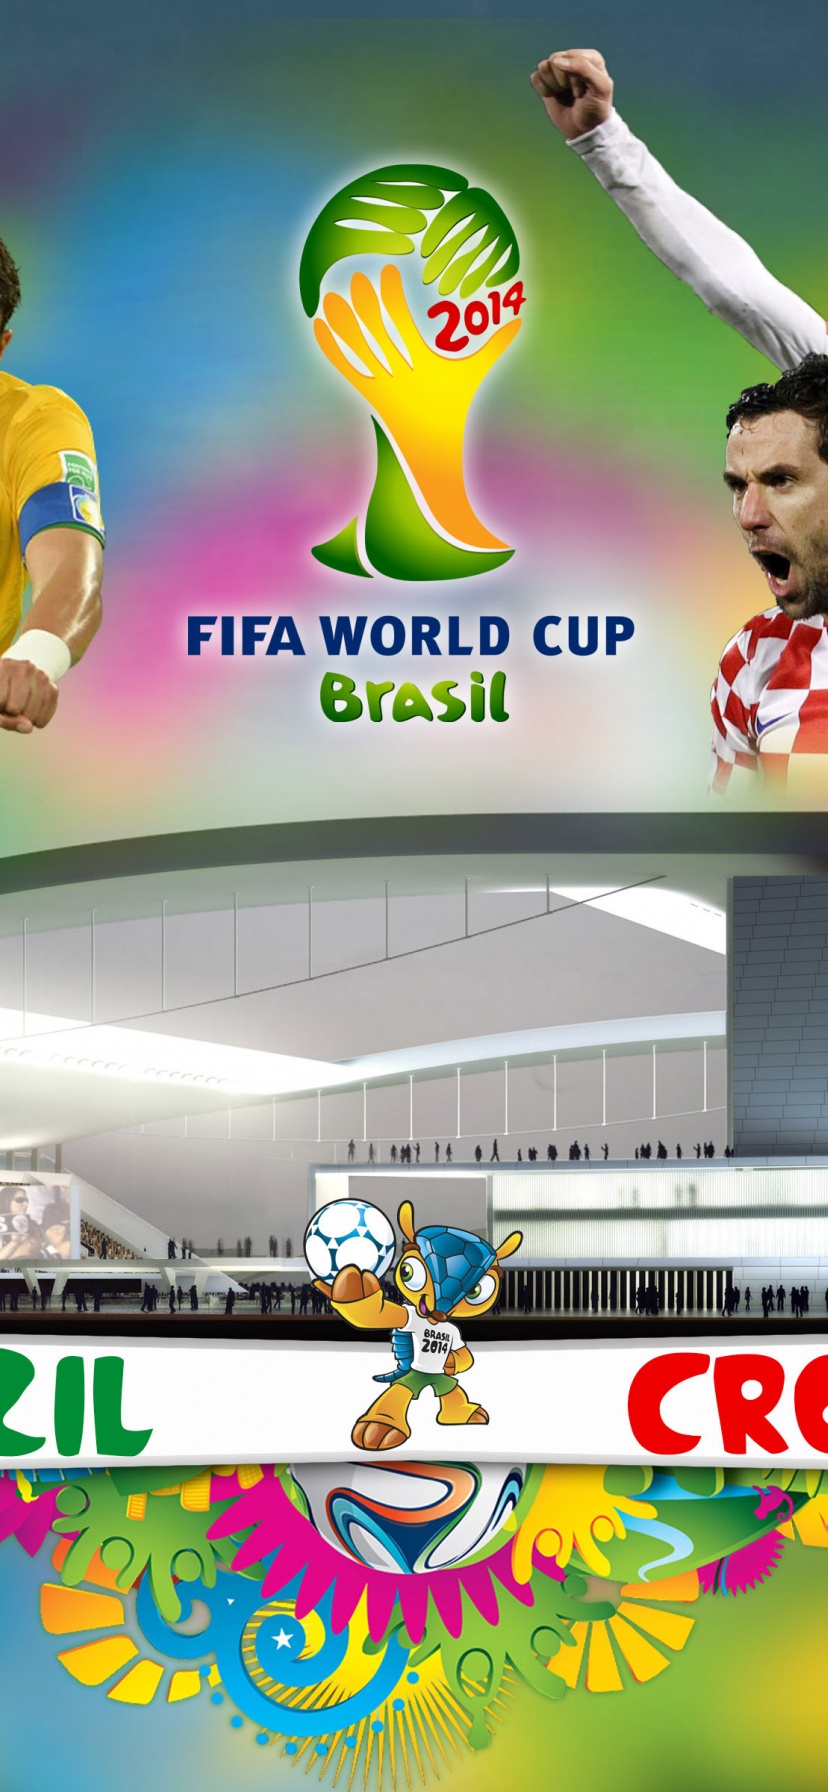 Brazil Vs Croatia 2014 World Cup